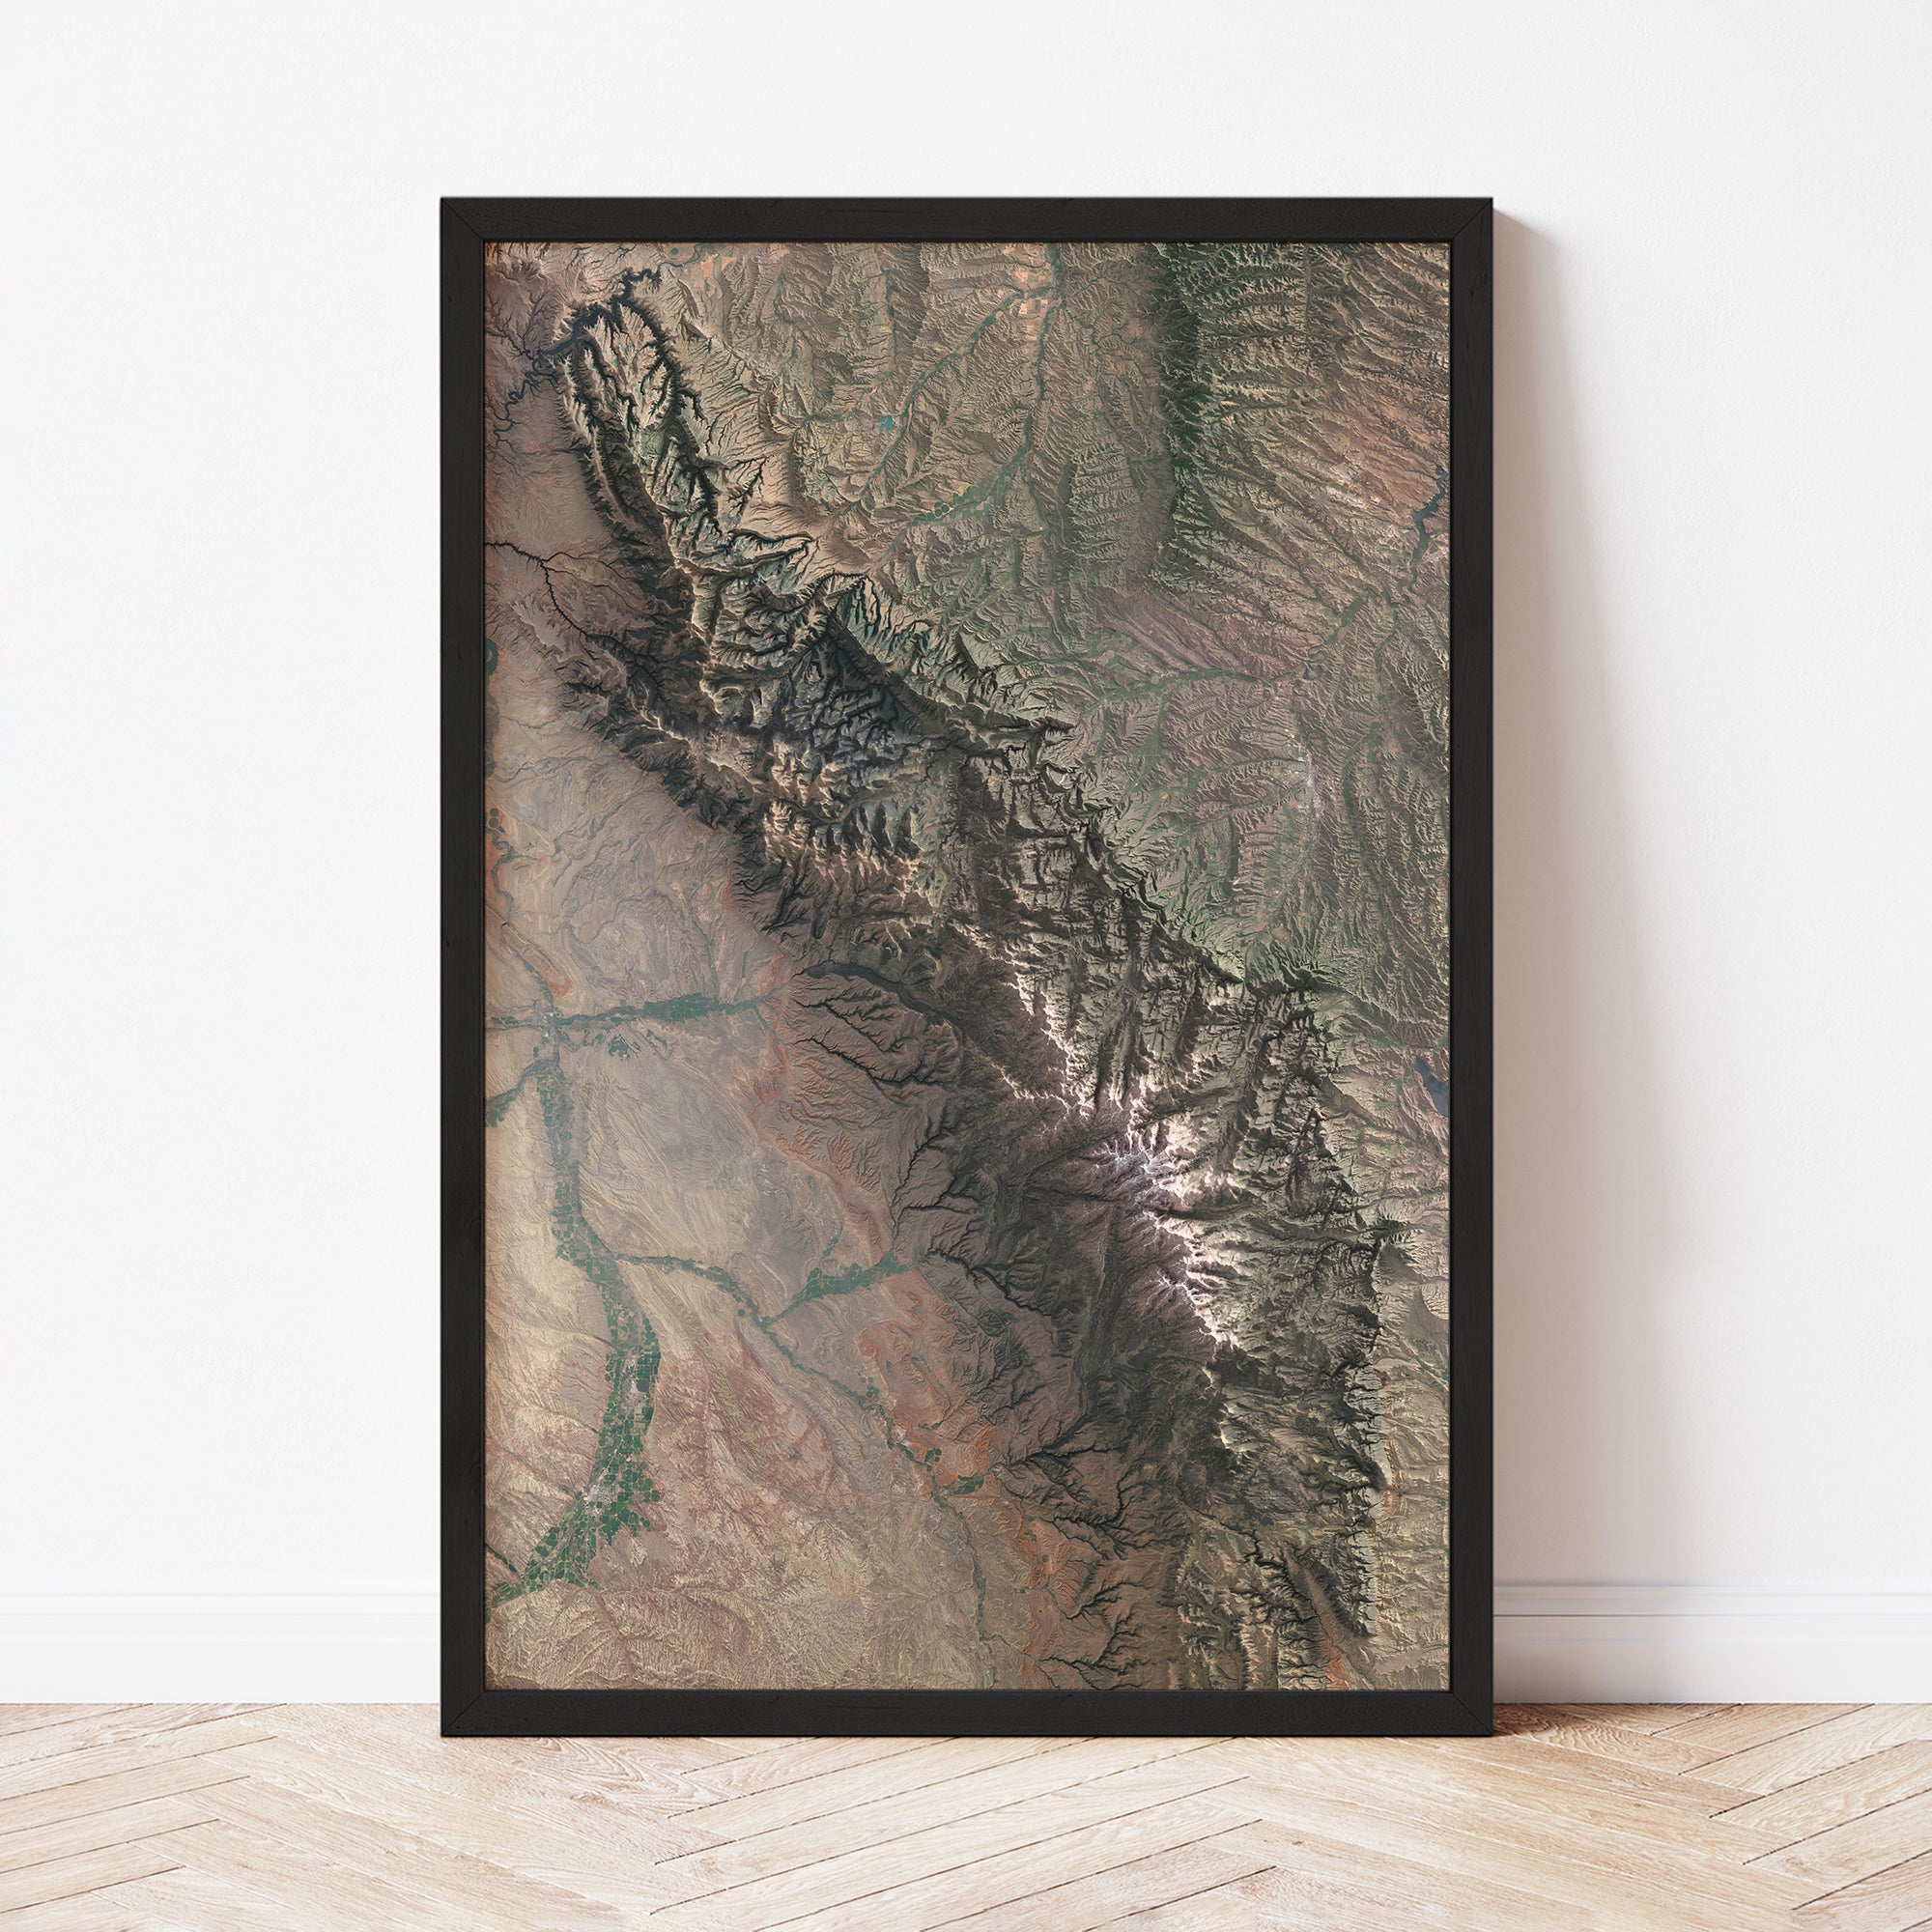 Bighorn Mountains - Satellite Imagery